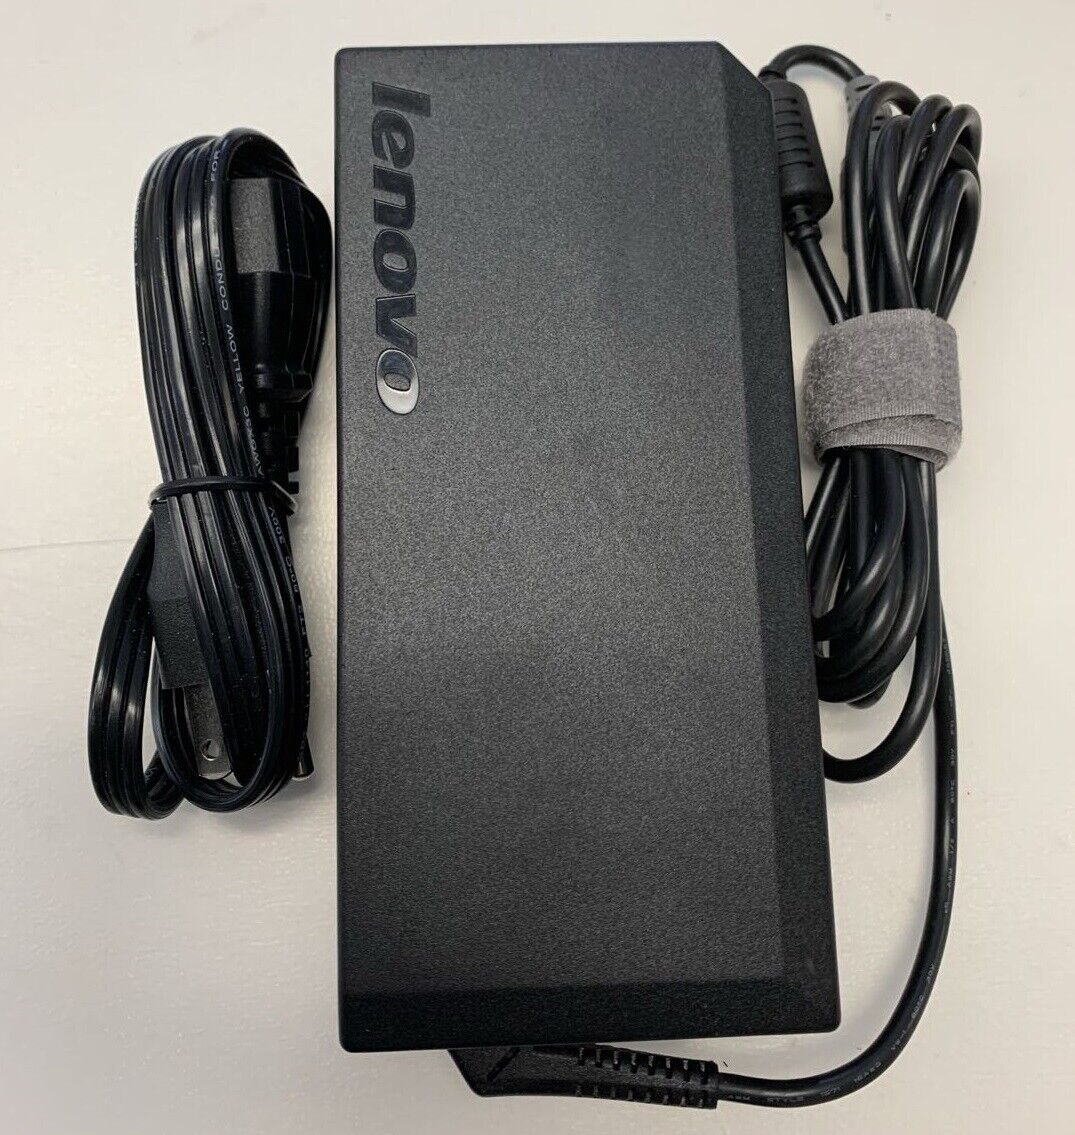 LENOVO ThinkPad T430 2350 Genuine Original AC Power Adapter Charger